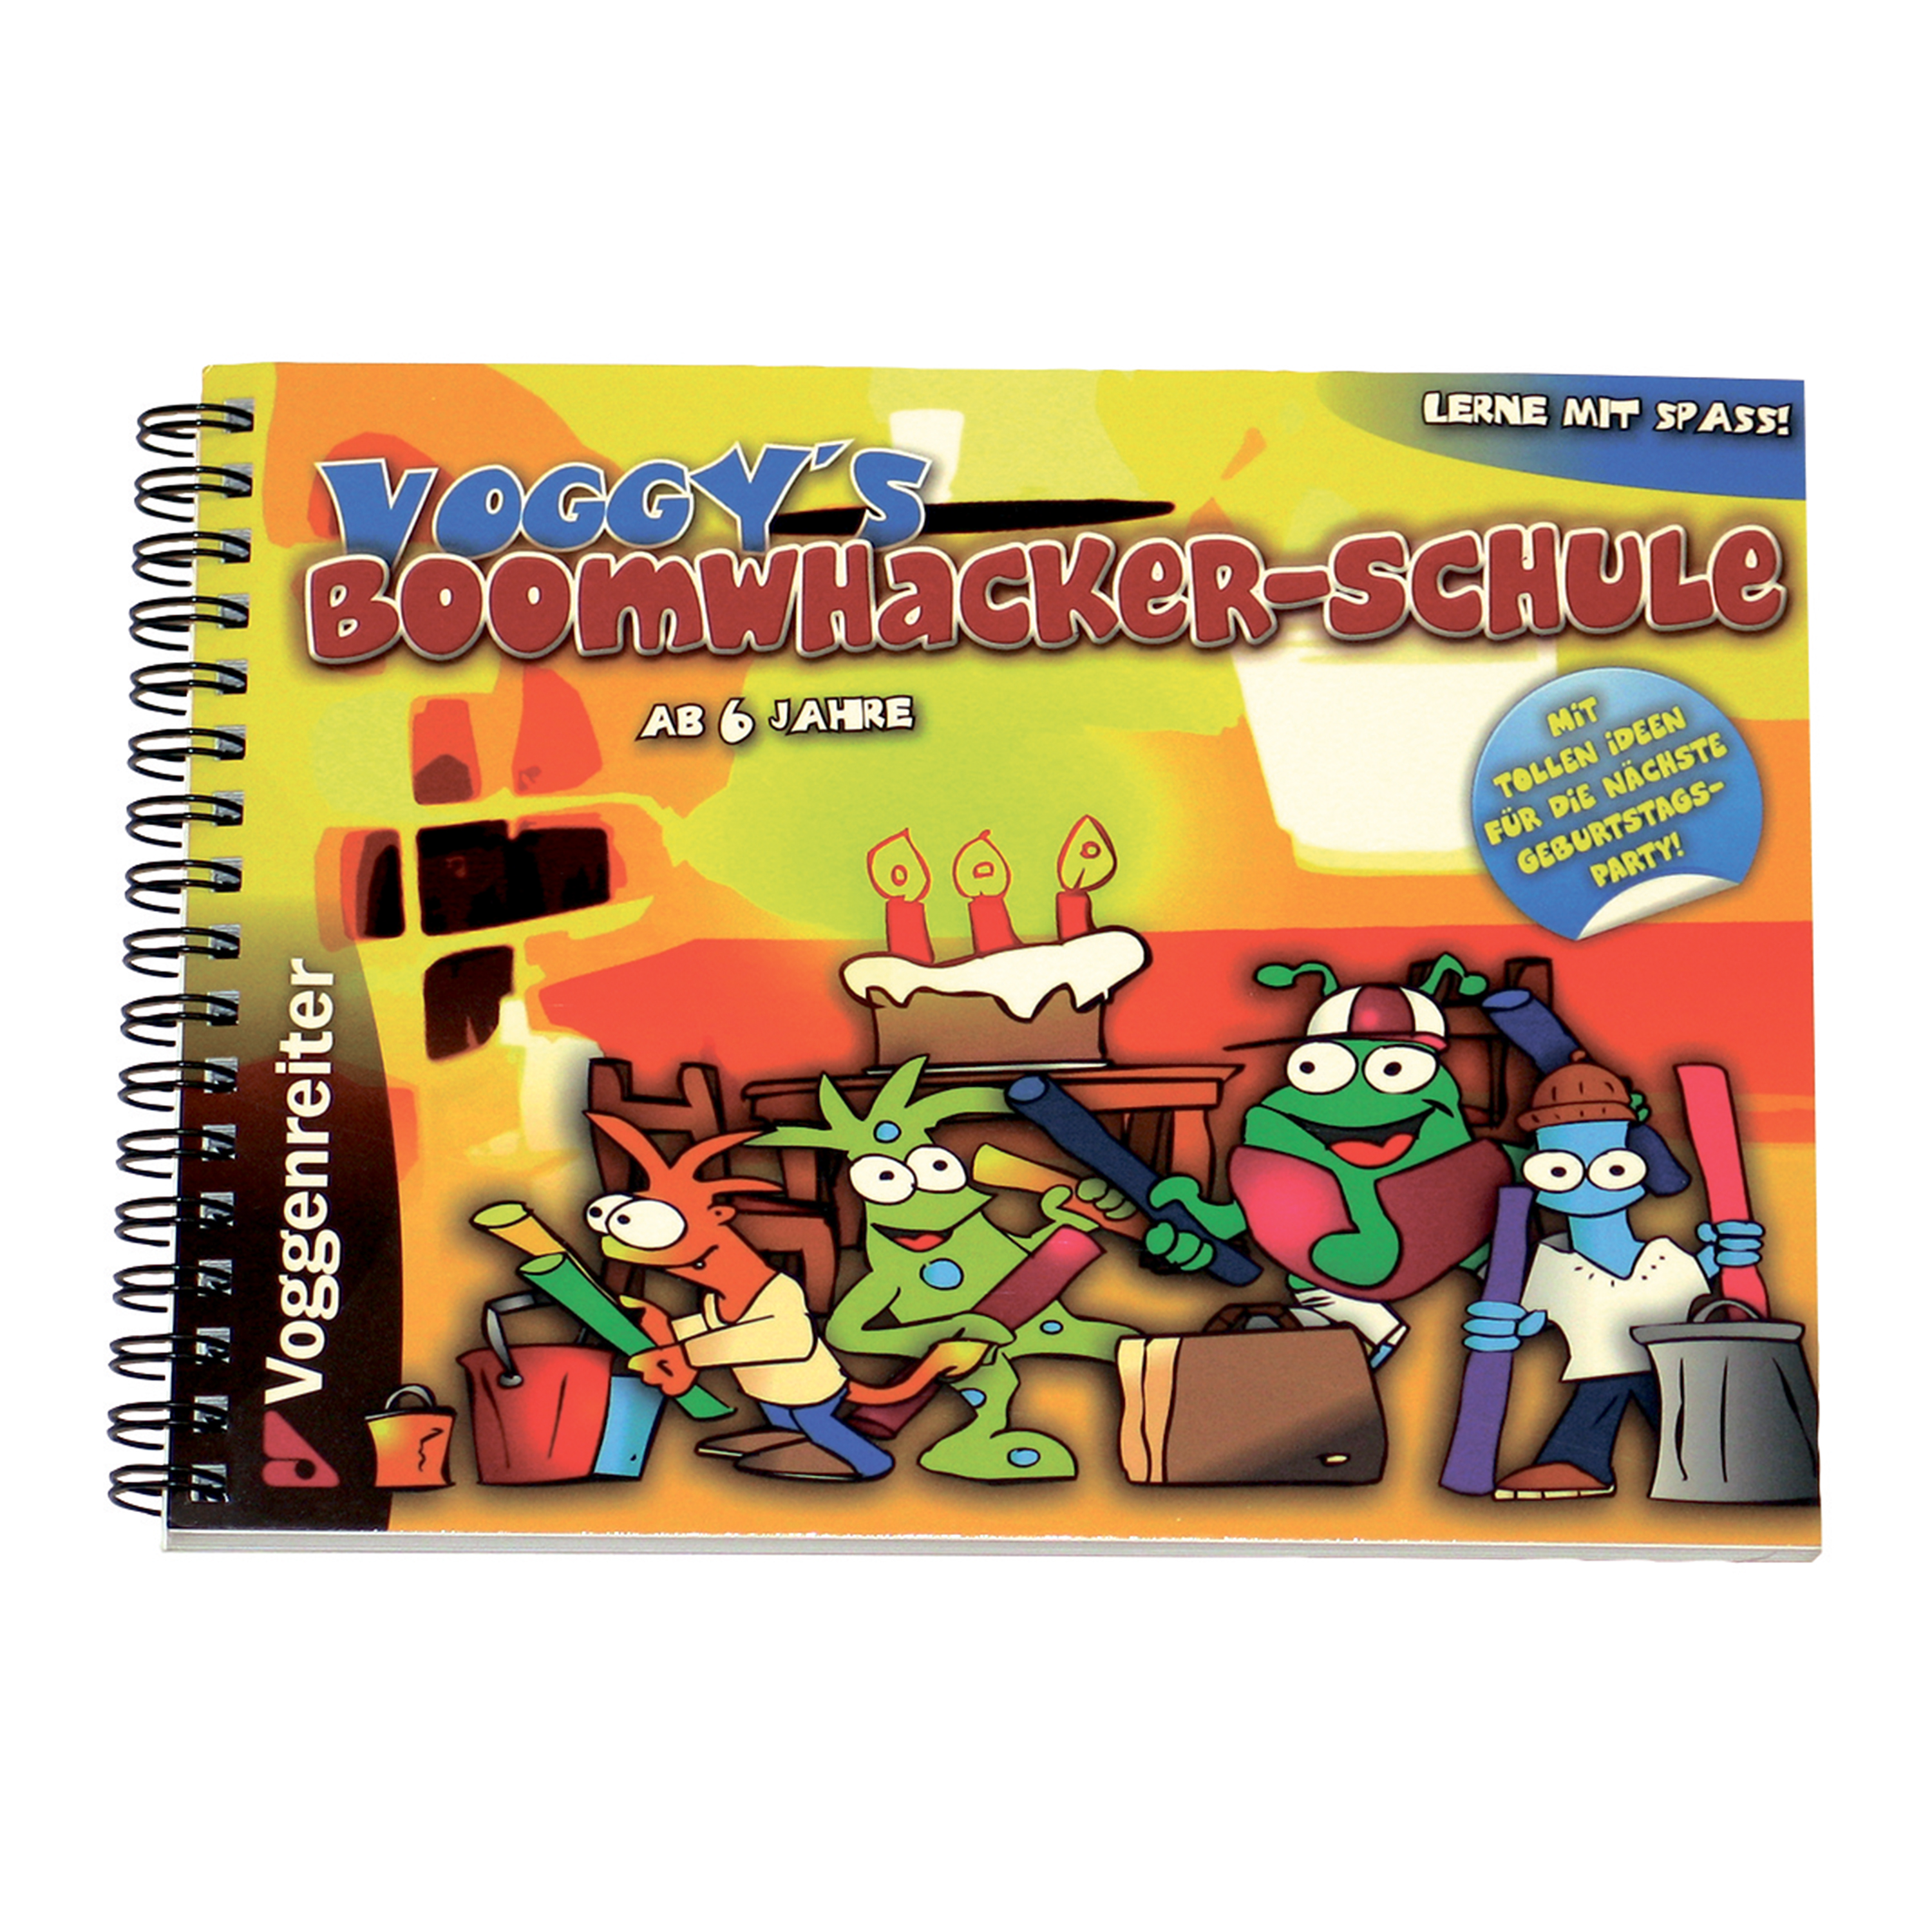 Boomwhacker - Schule, mit CD